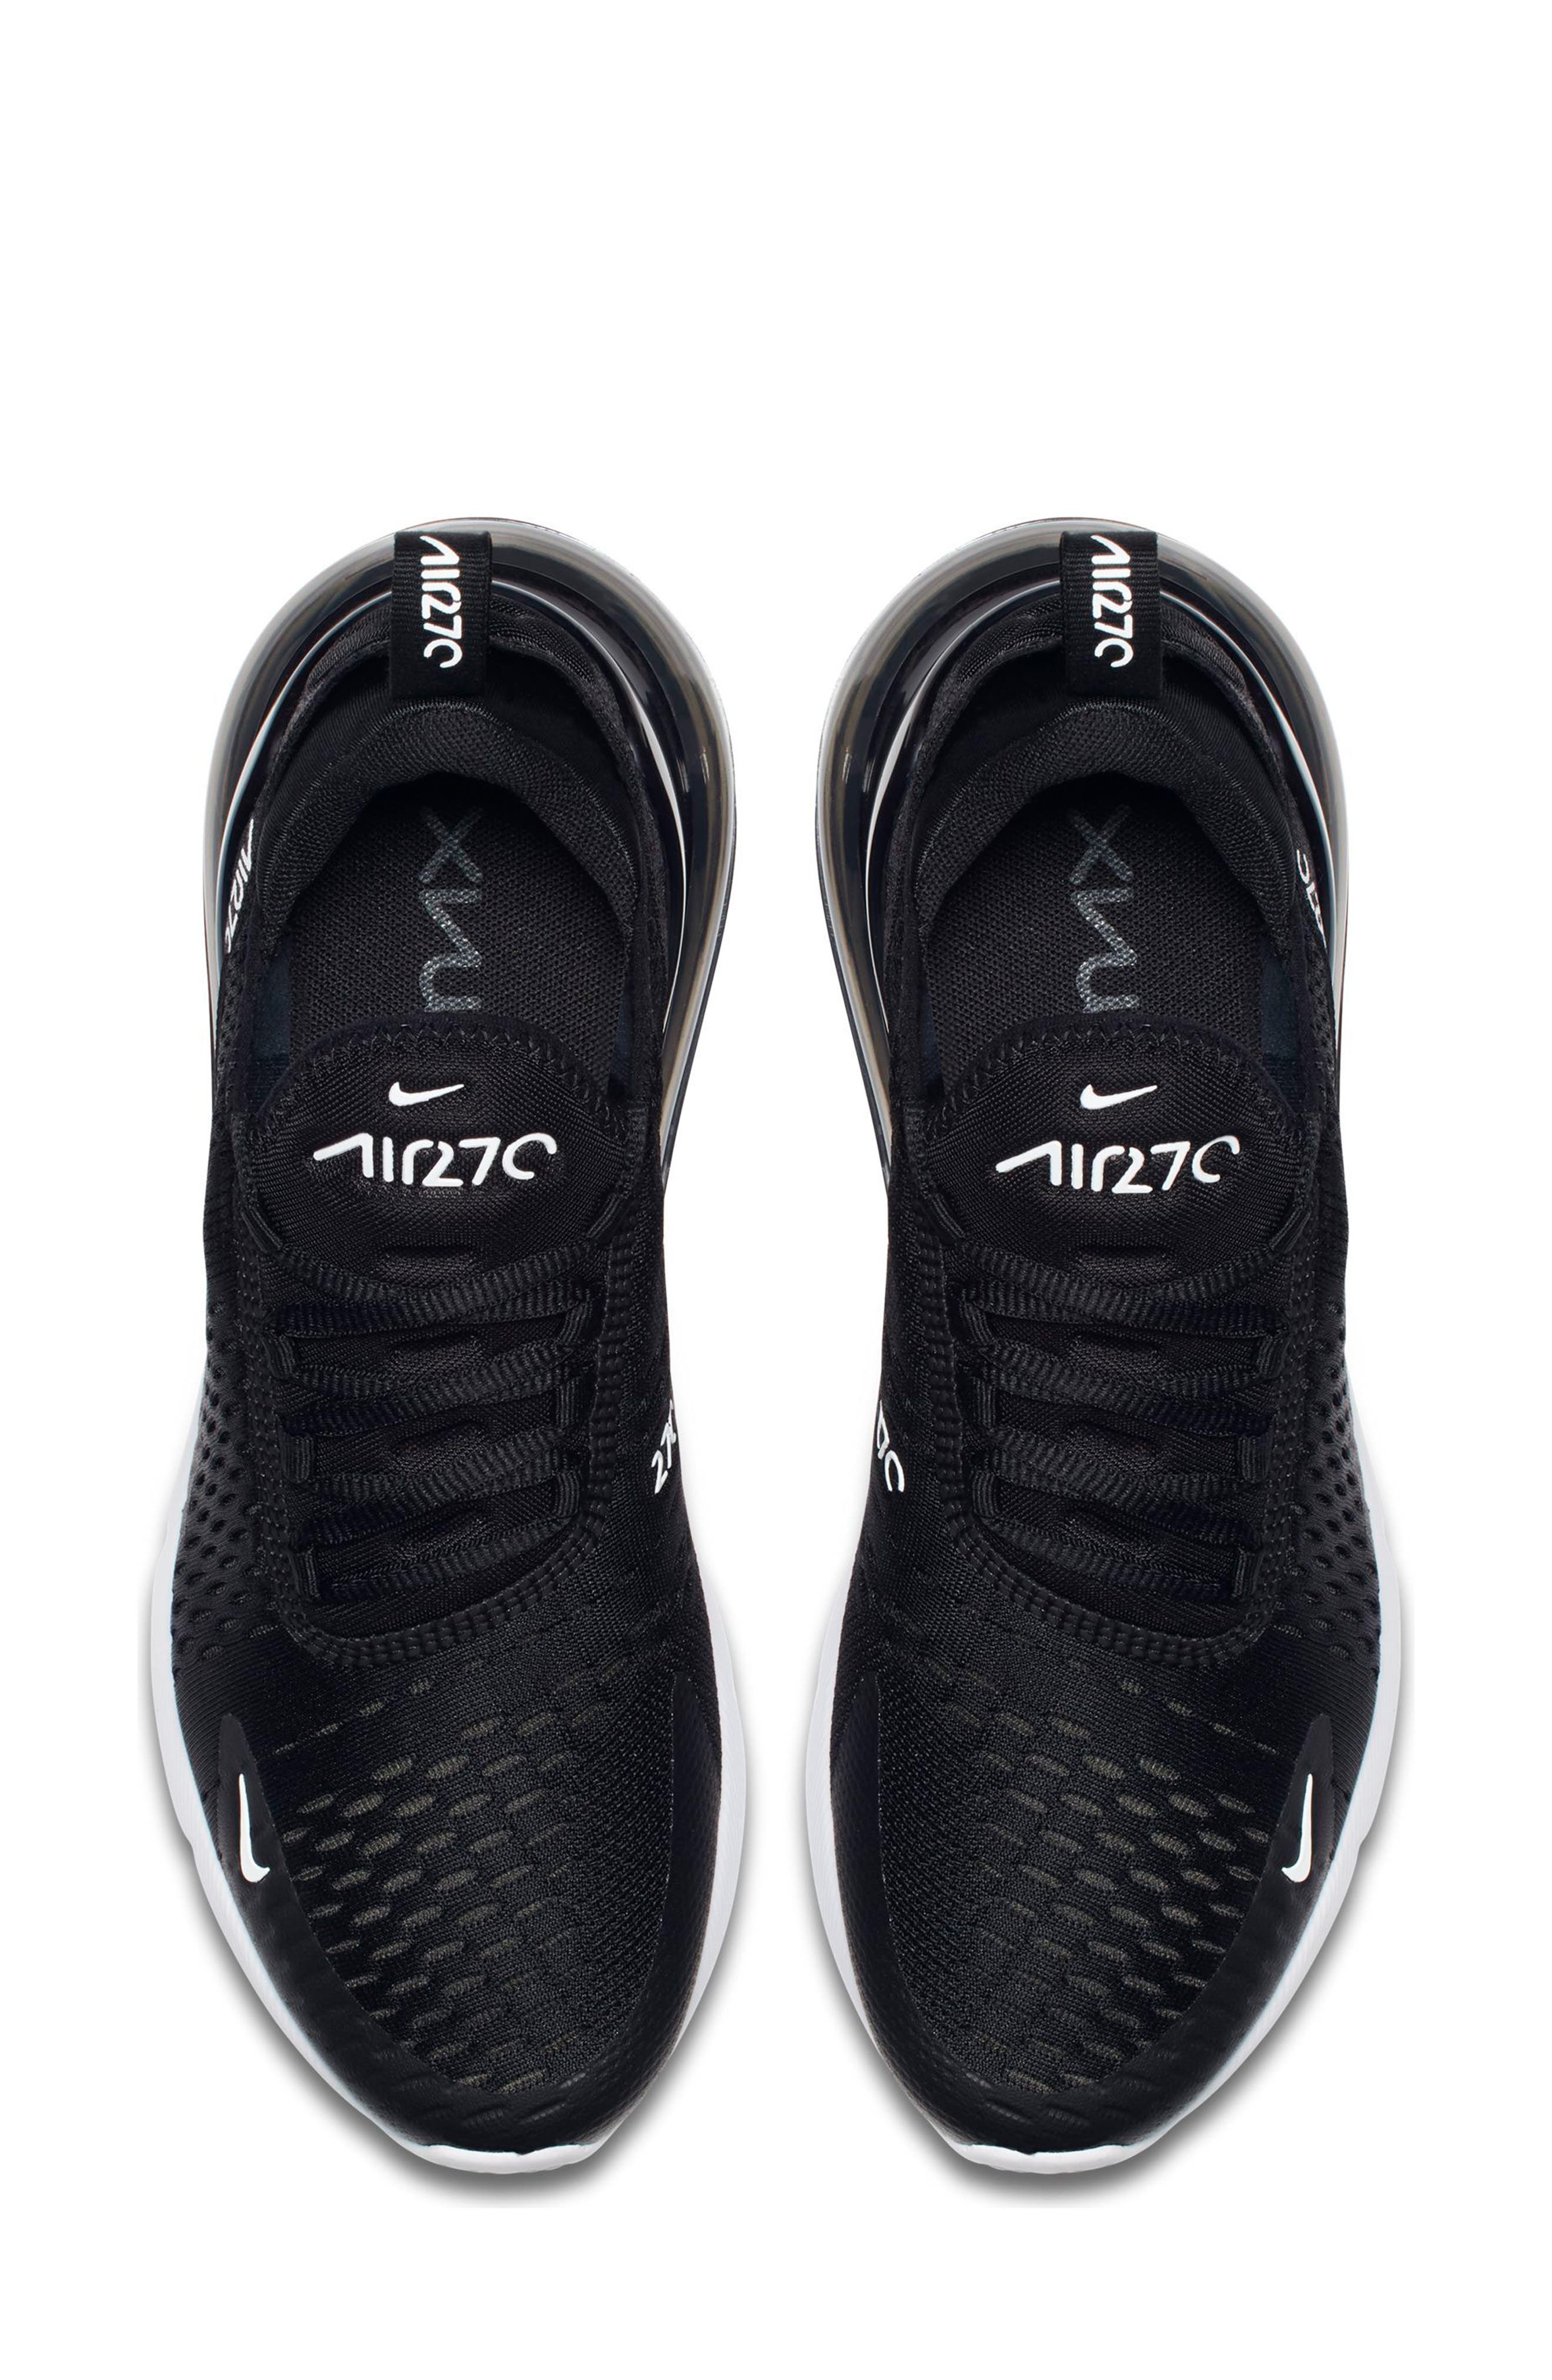 women's air max 270 sneaker in white & black